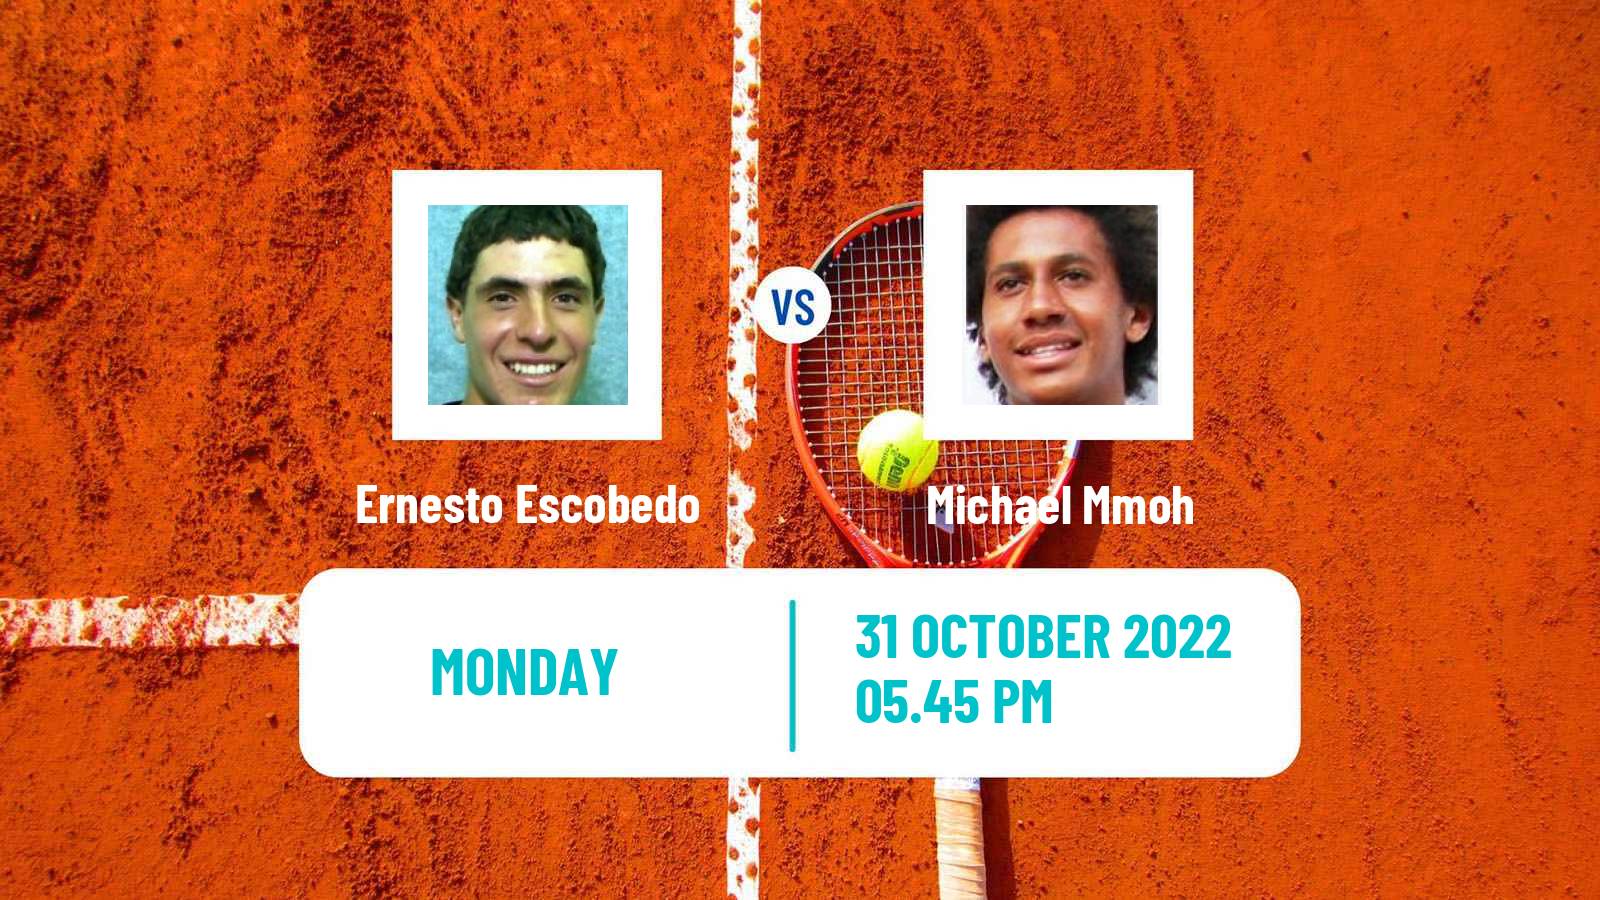 Tennis ATP Challenger Ernesto Escobedo - Michael Mmoh